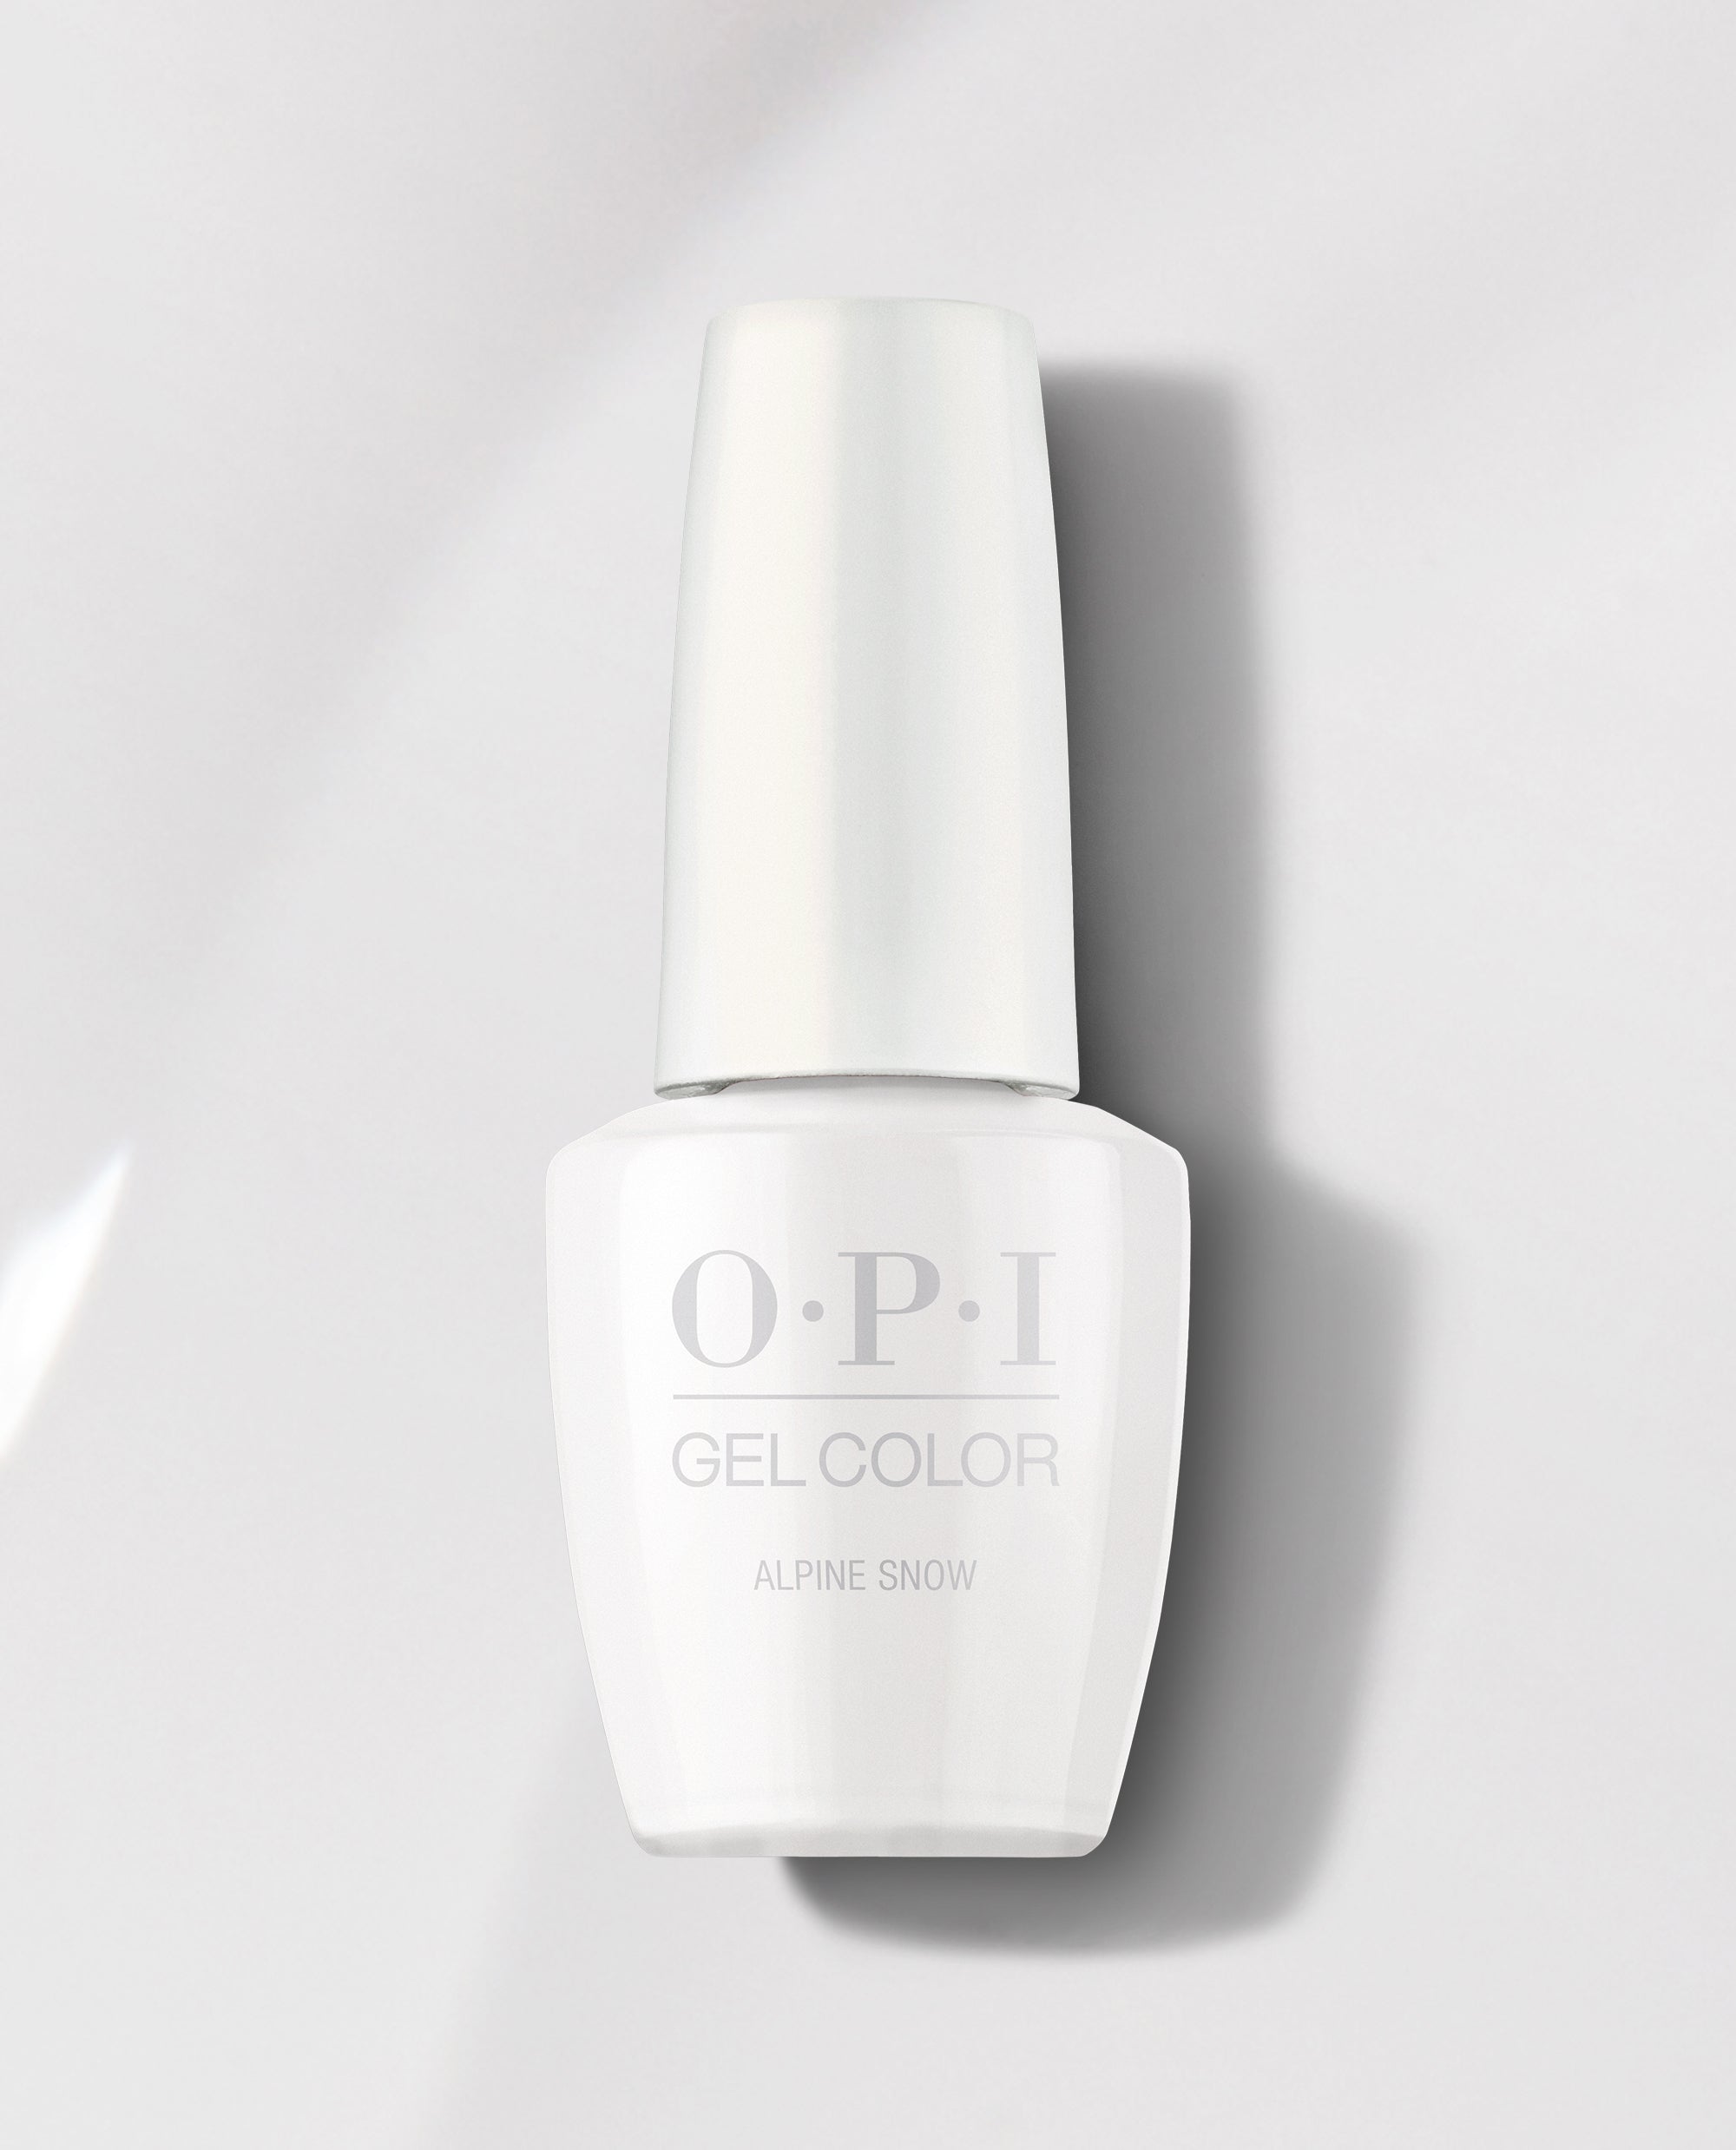 OPI Fall 2015 Venice Collection Swatches & Review | Nail polish, Opi nail  colors, Gel nails